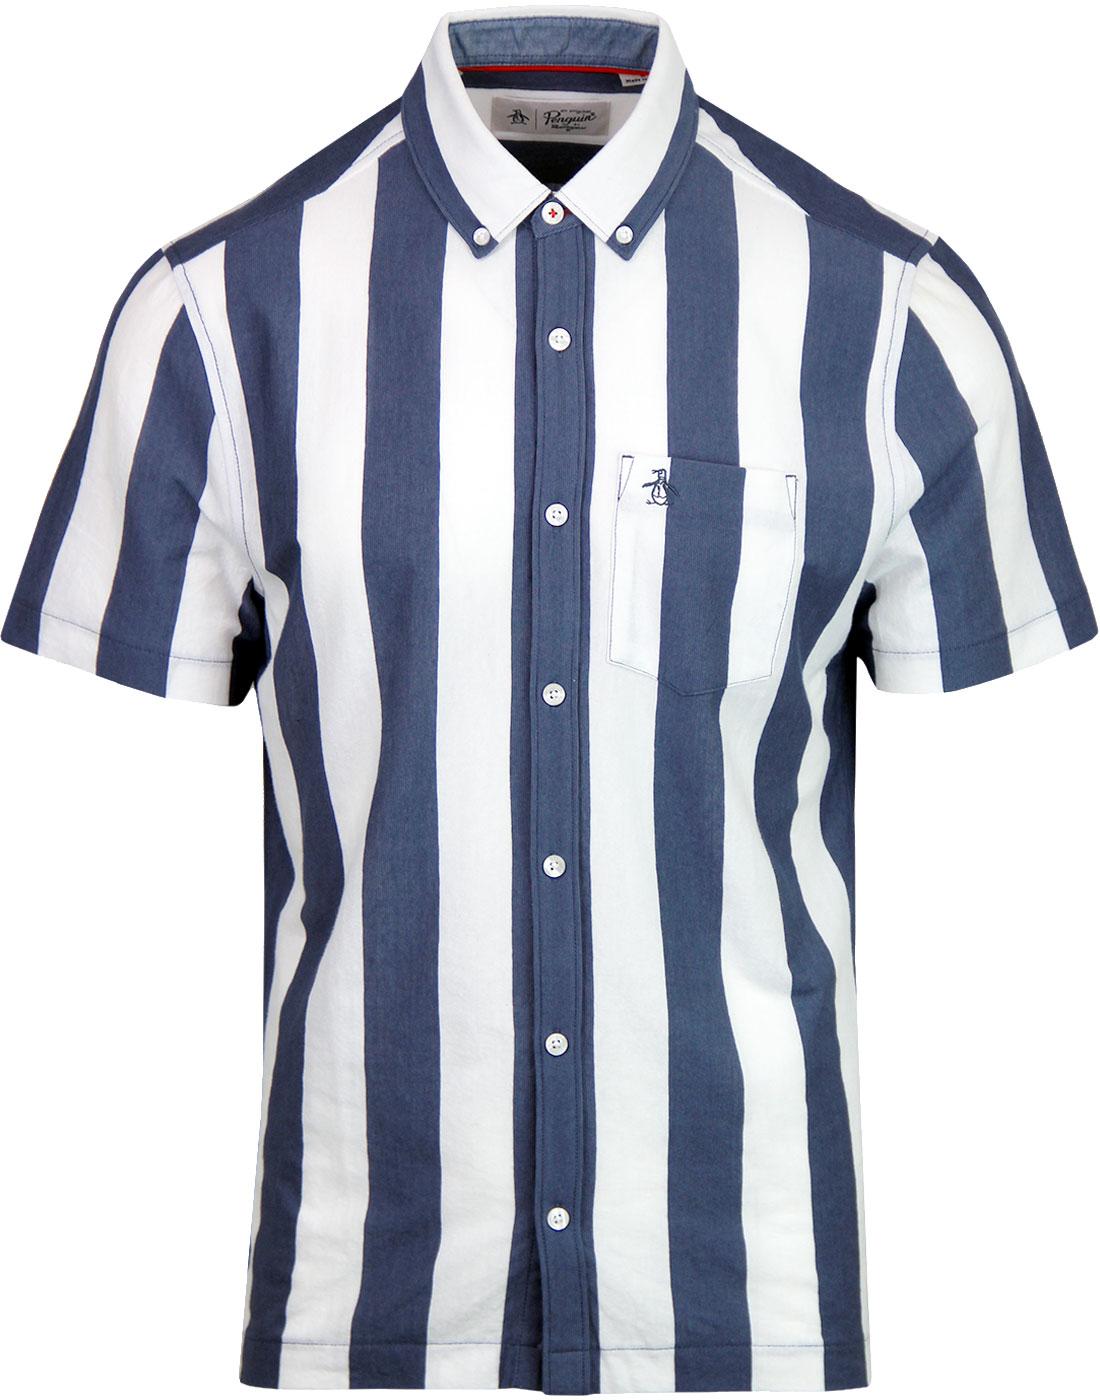 ORIGINAL PENGUIN Knitted Vertical Stripe Mod Shirt